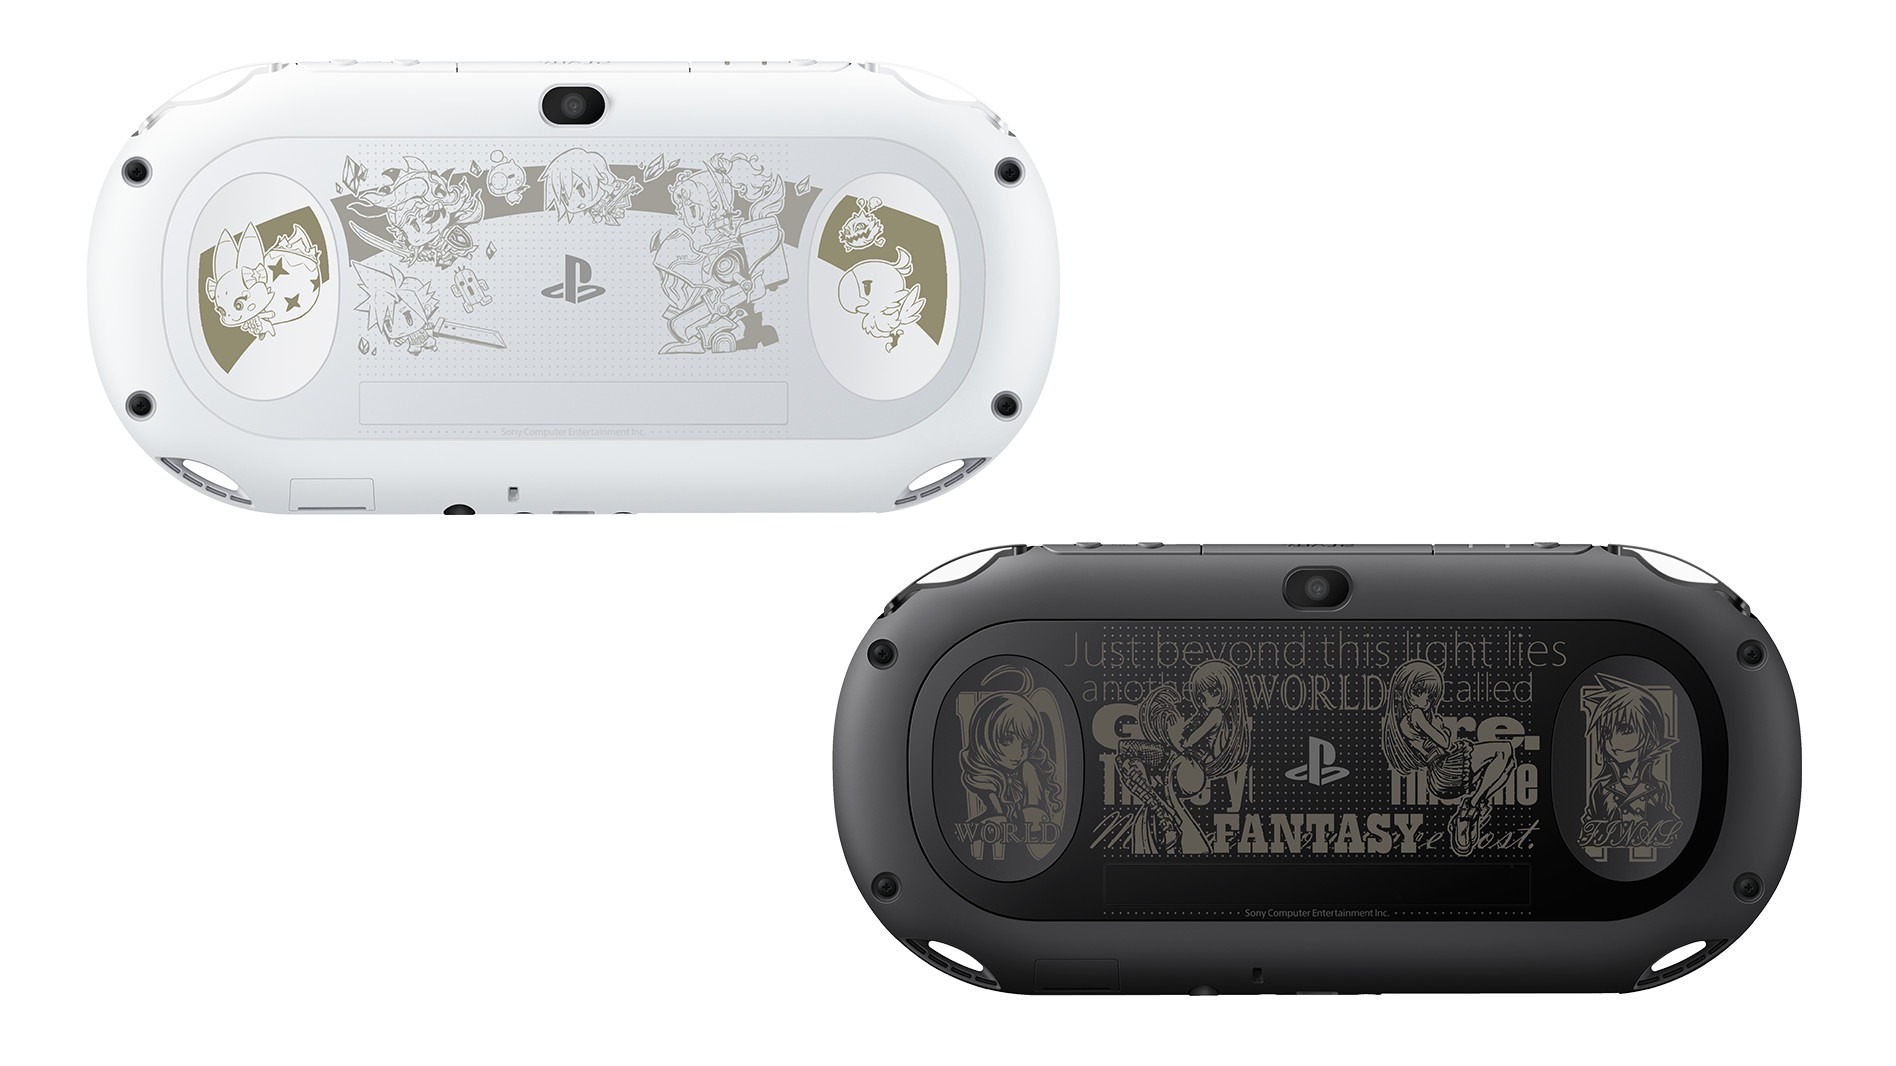 World Of Final Fantasy Ps Vita Models Announced For Japan Gematsu